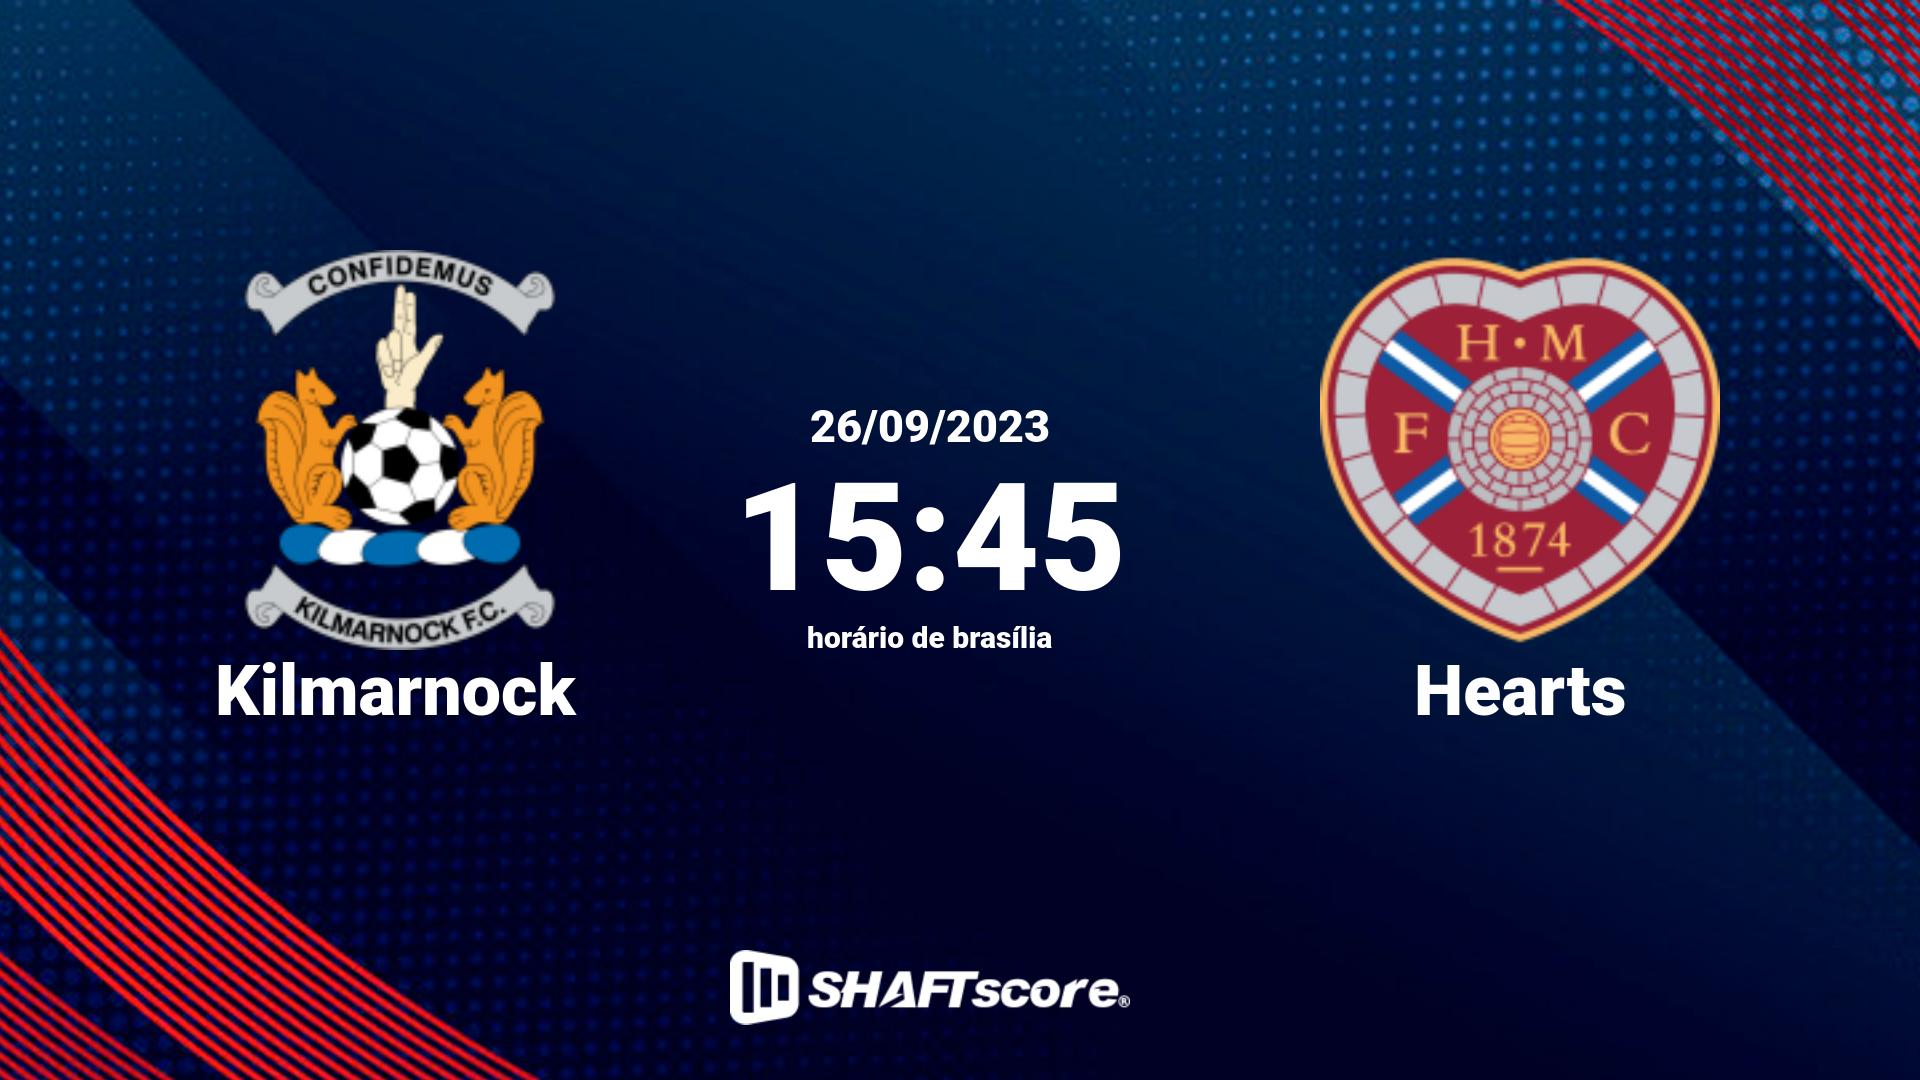 Estatísticas do jogo Kilmarnock vs Hearts 26.09 15:45